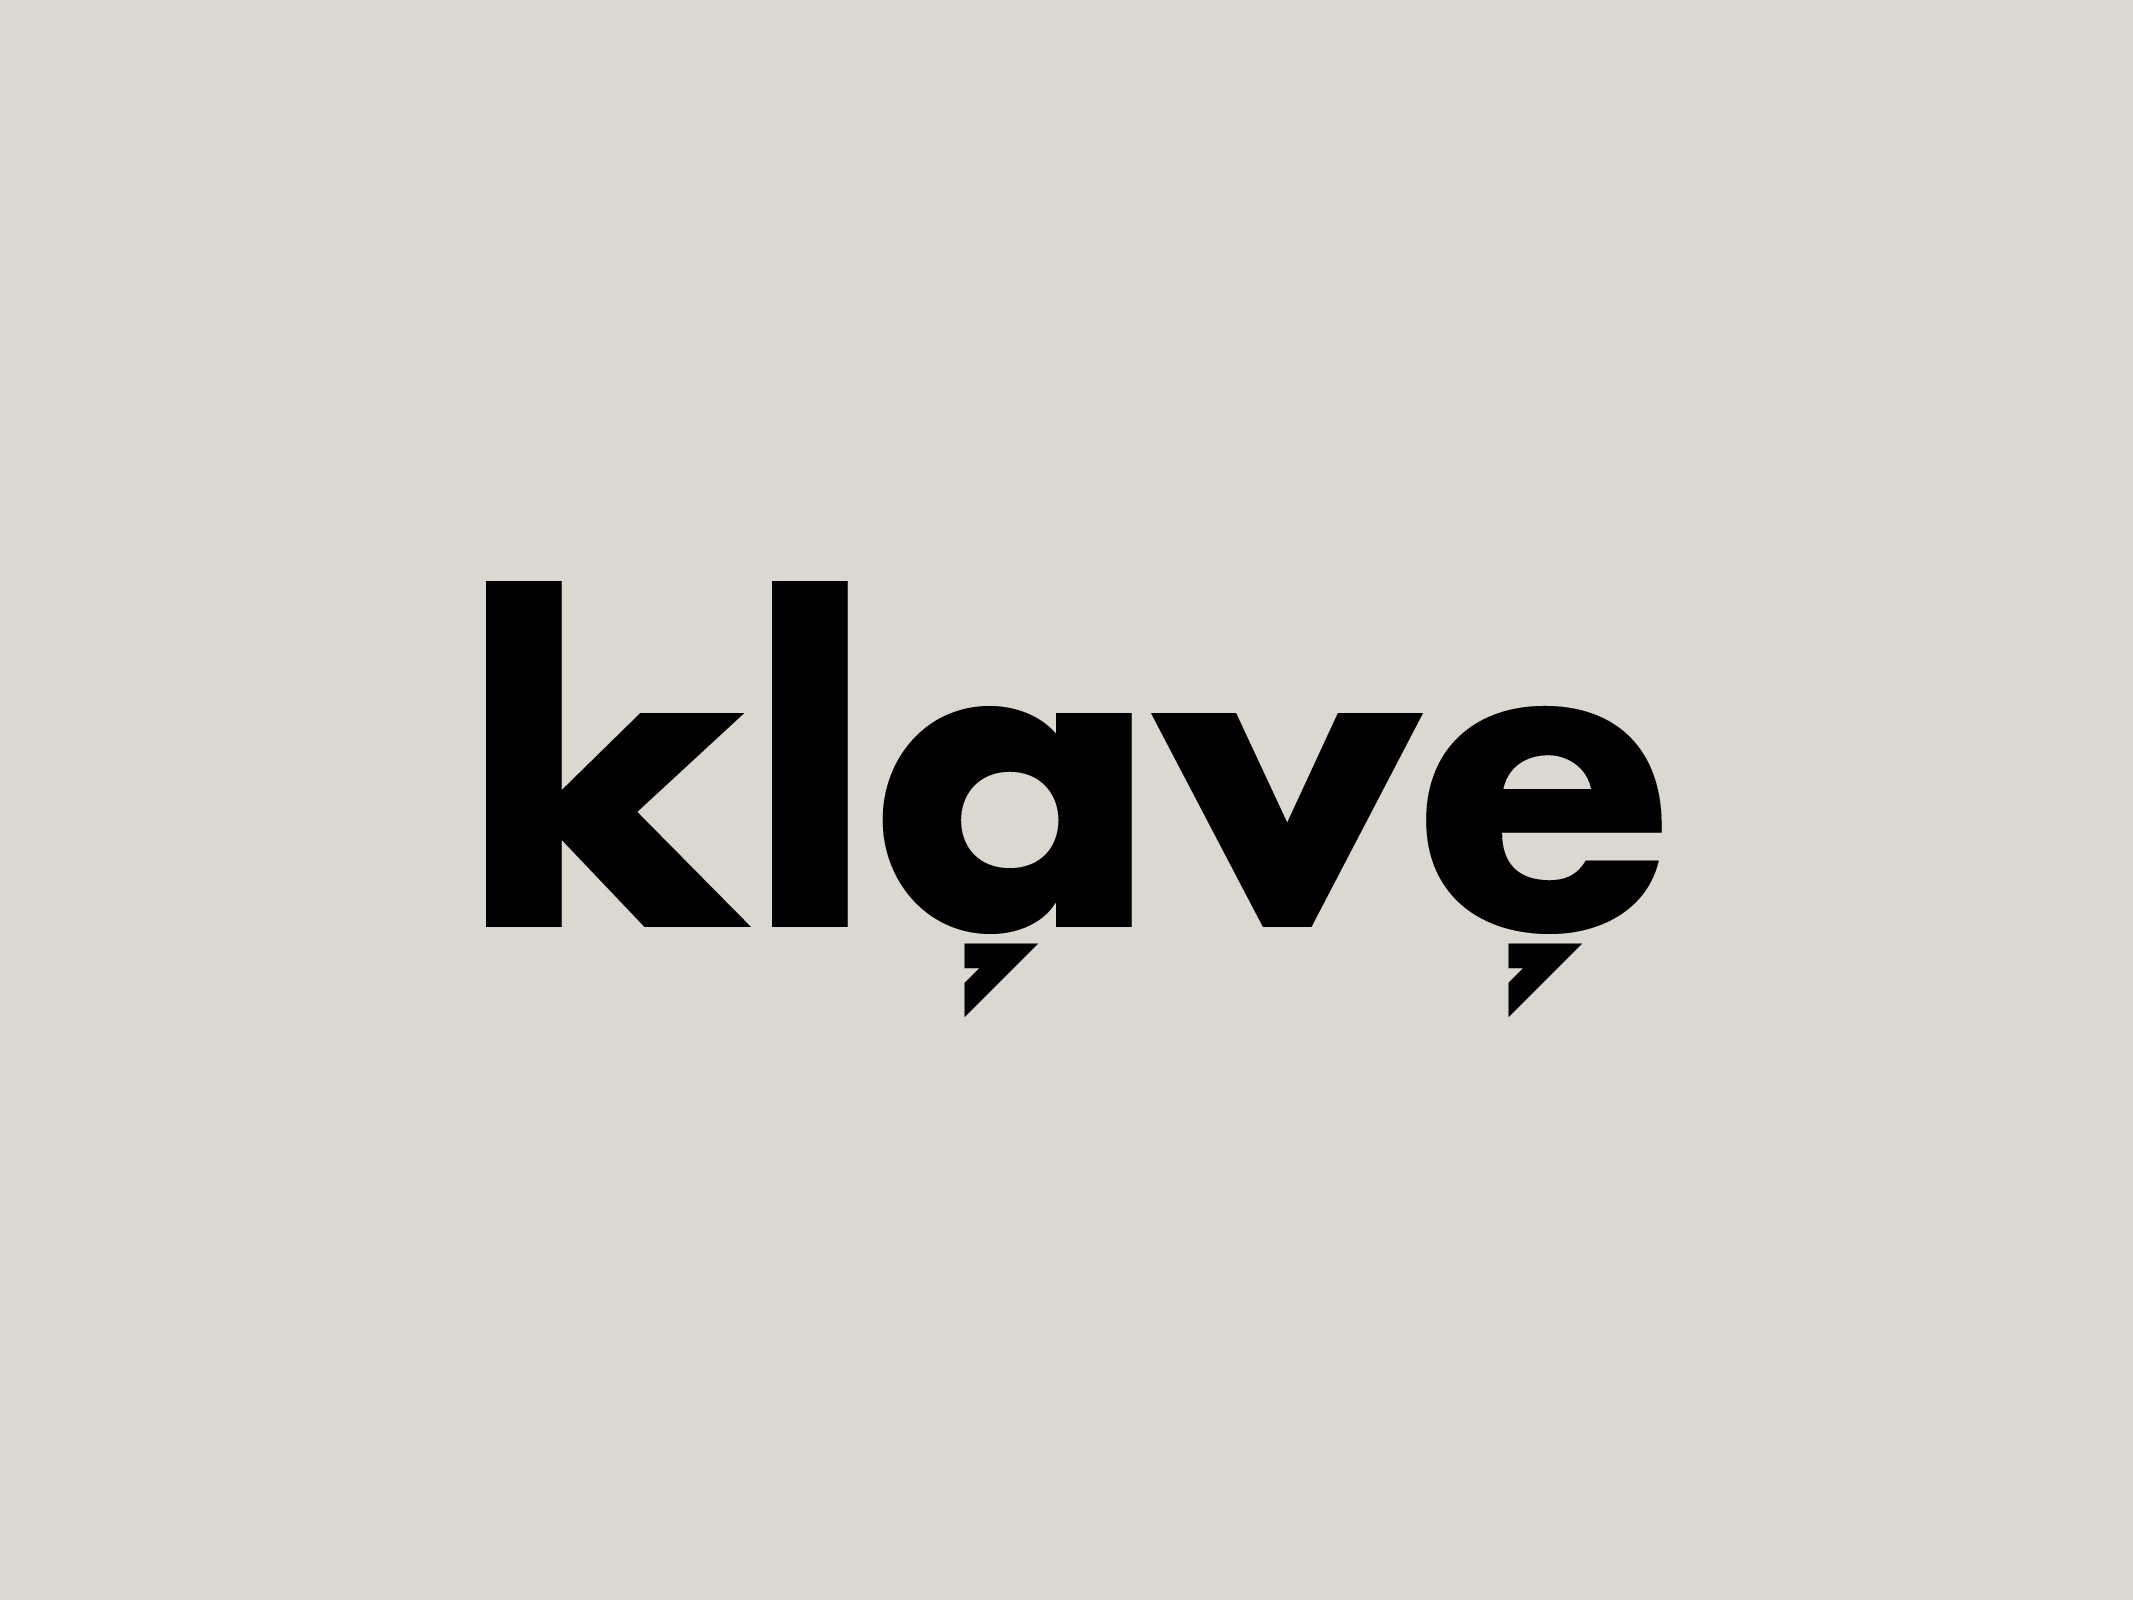 Klave by Daniel Cavalcanti - Creative Work